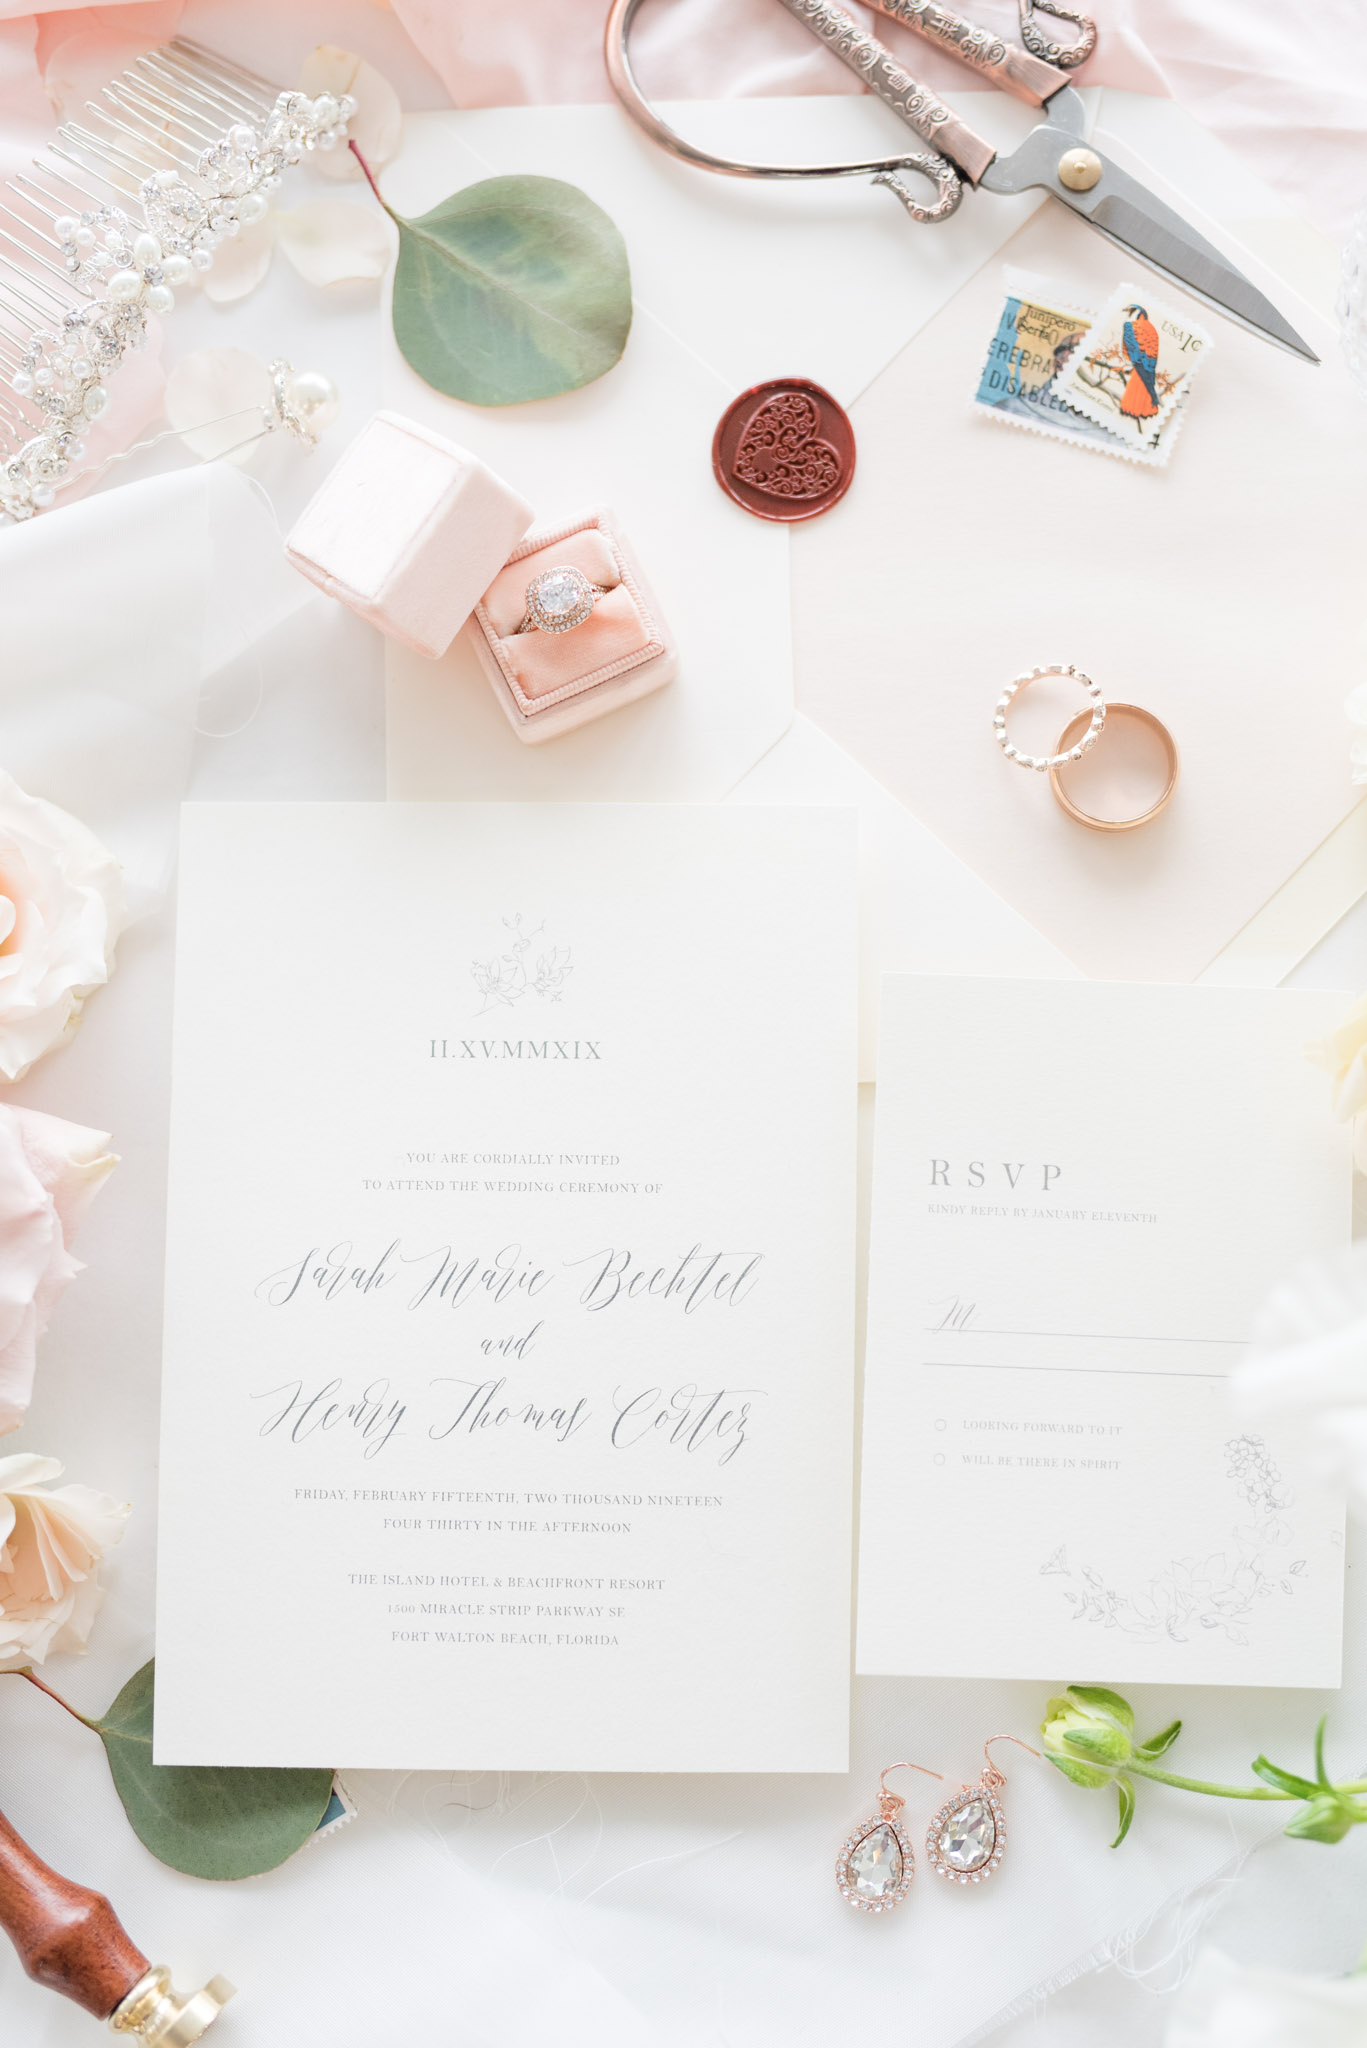 Wedding invitations sit with blush details.